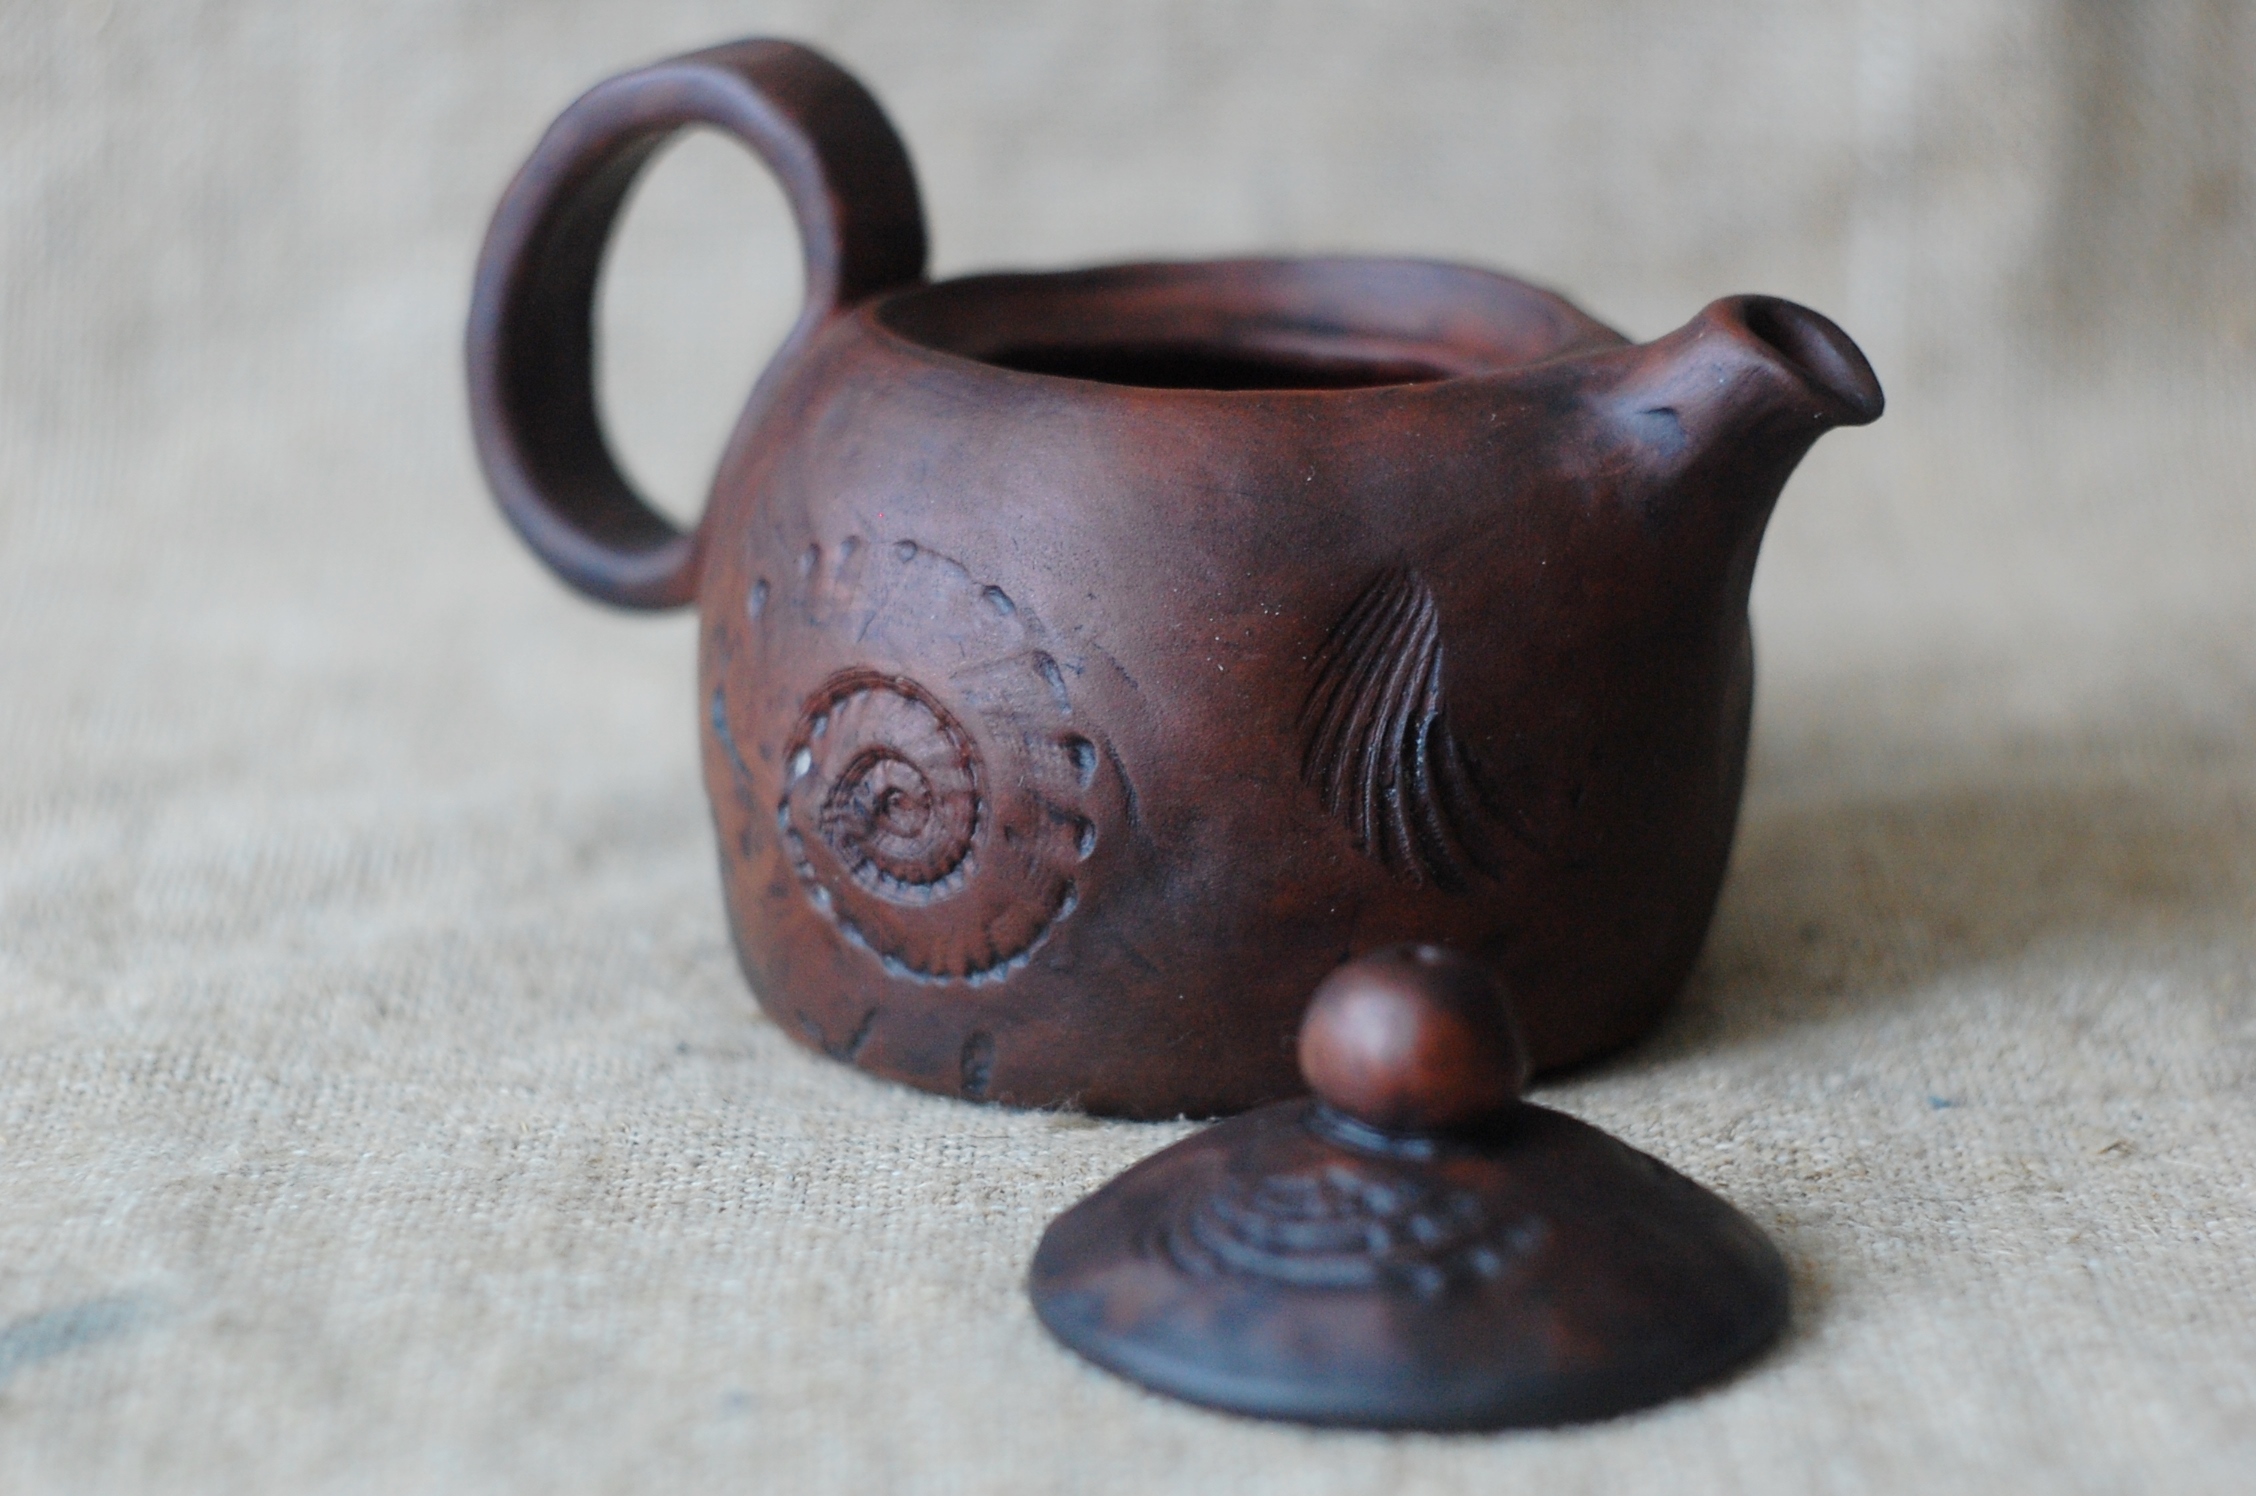 Pottery tea brewing pot or teapot for tea ceremony "Sea"